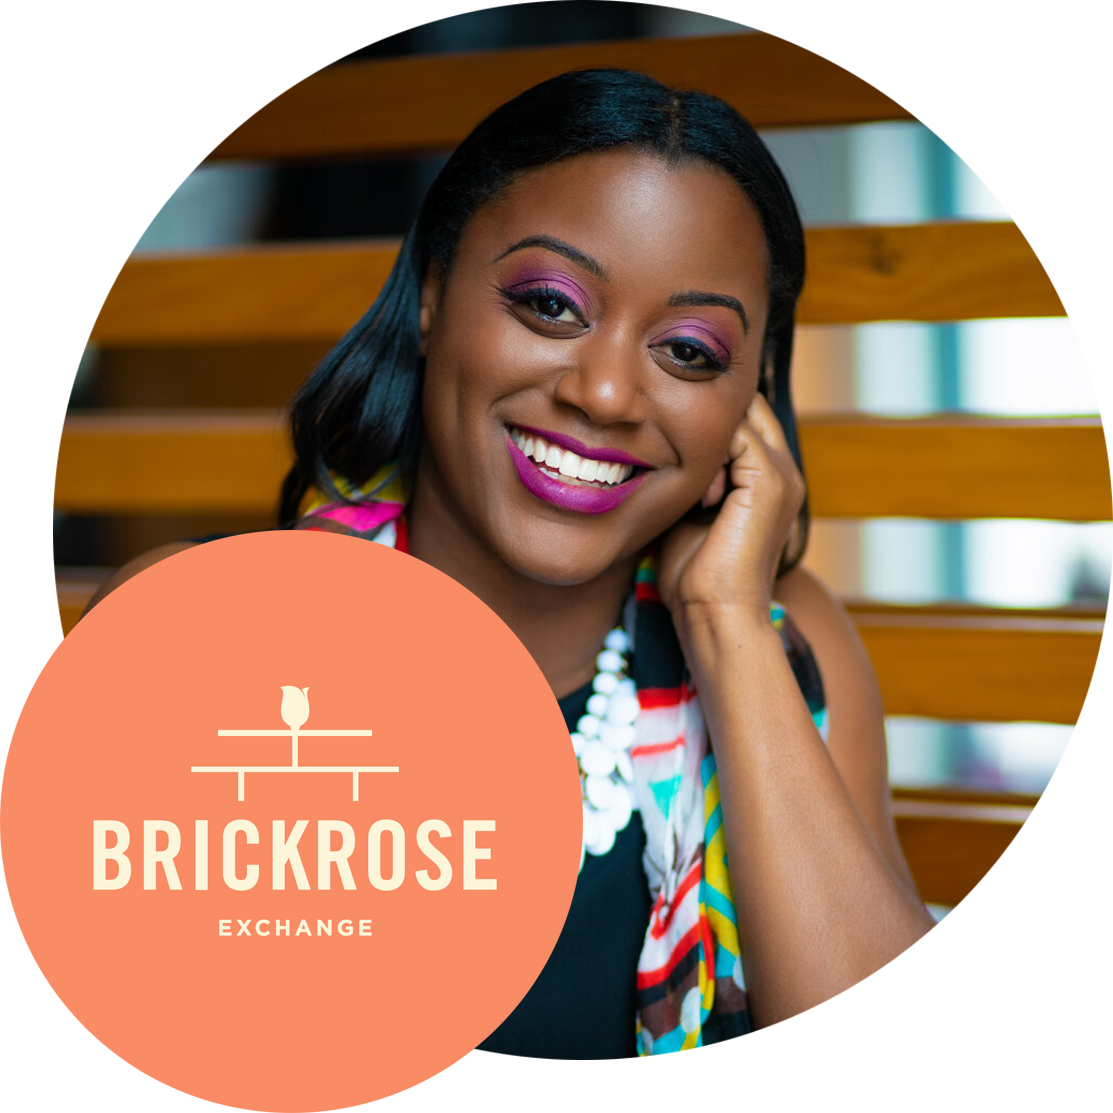 BrickRose Exchange Founder Bianca J. Jackson